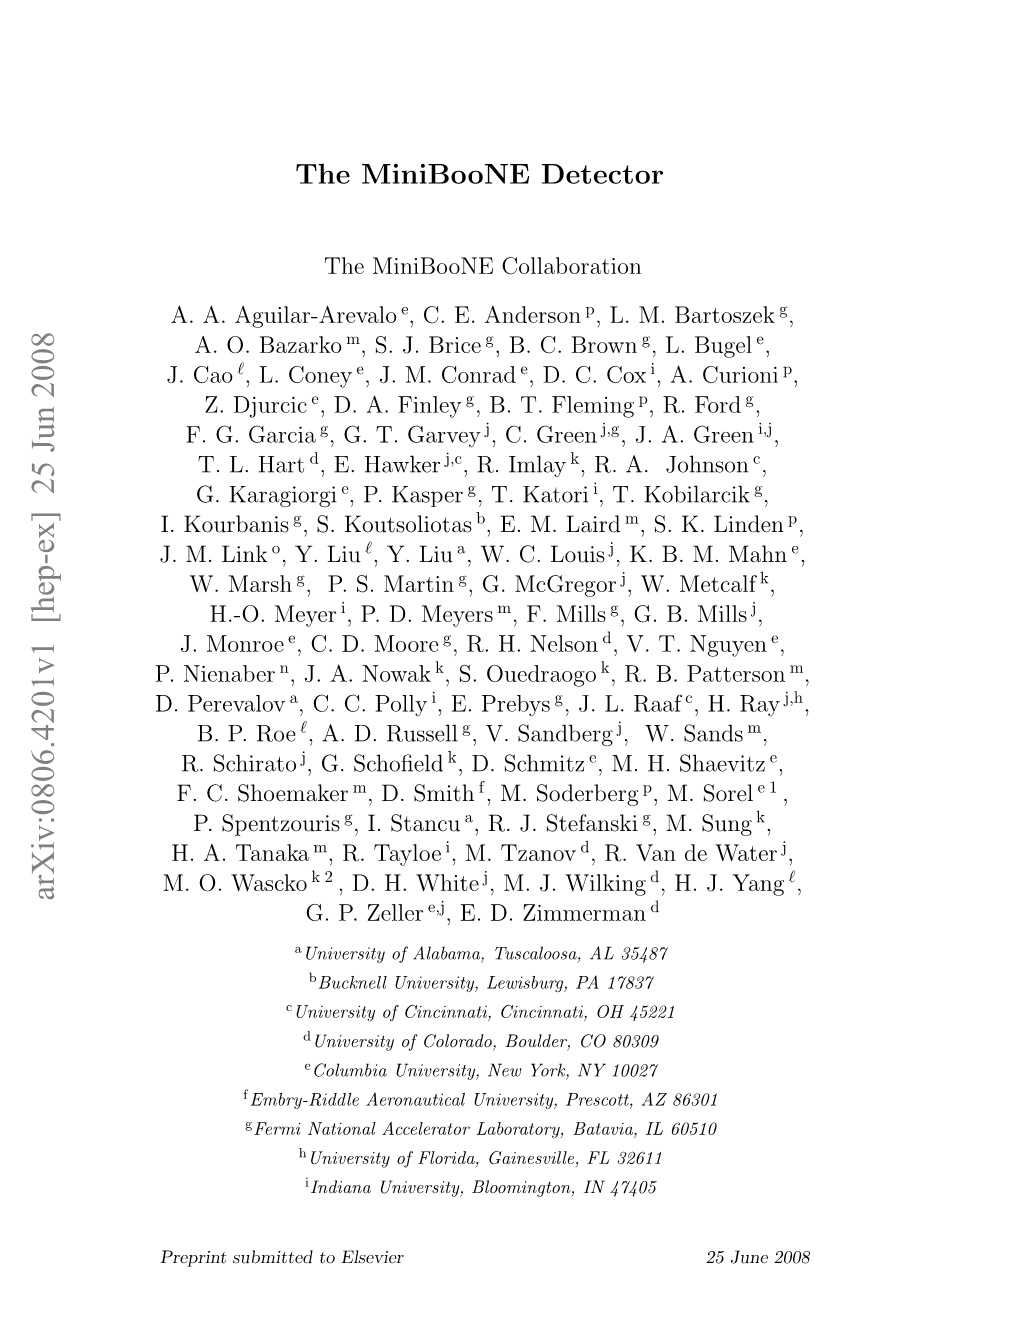 The Miniboone Detector